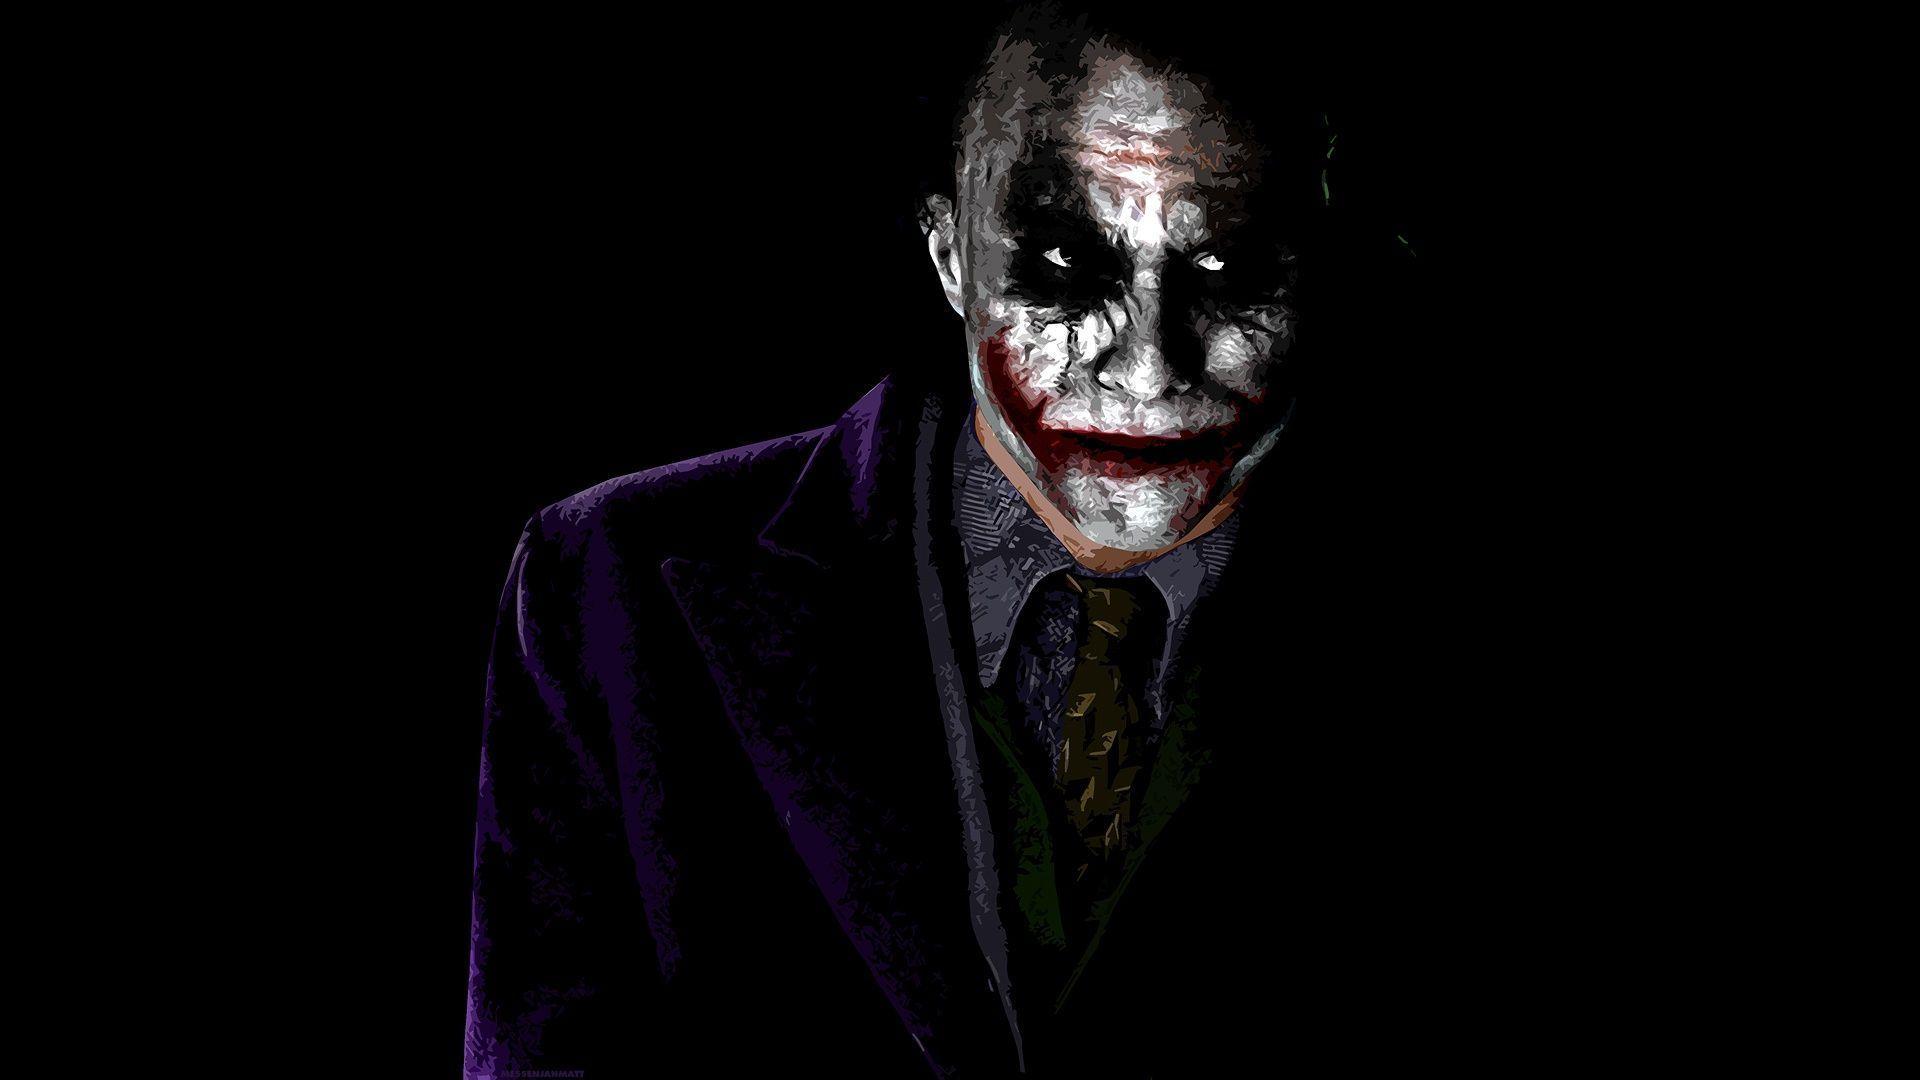 Free download Joker HD Wallpaper [1920x1080] for your Desktop, Mobile & Tablet. Explore The Joker Desktop Background. Joker Comic Wallpaper, New Joker Wallpaper, The Joker Desktop Wallpaper